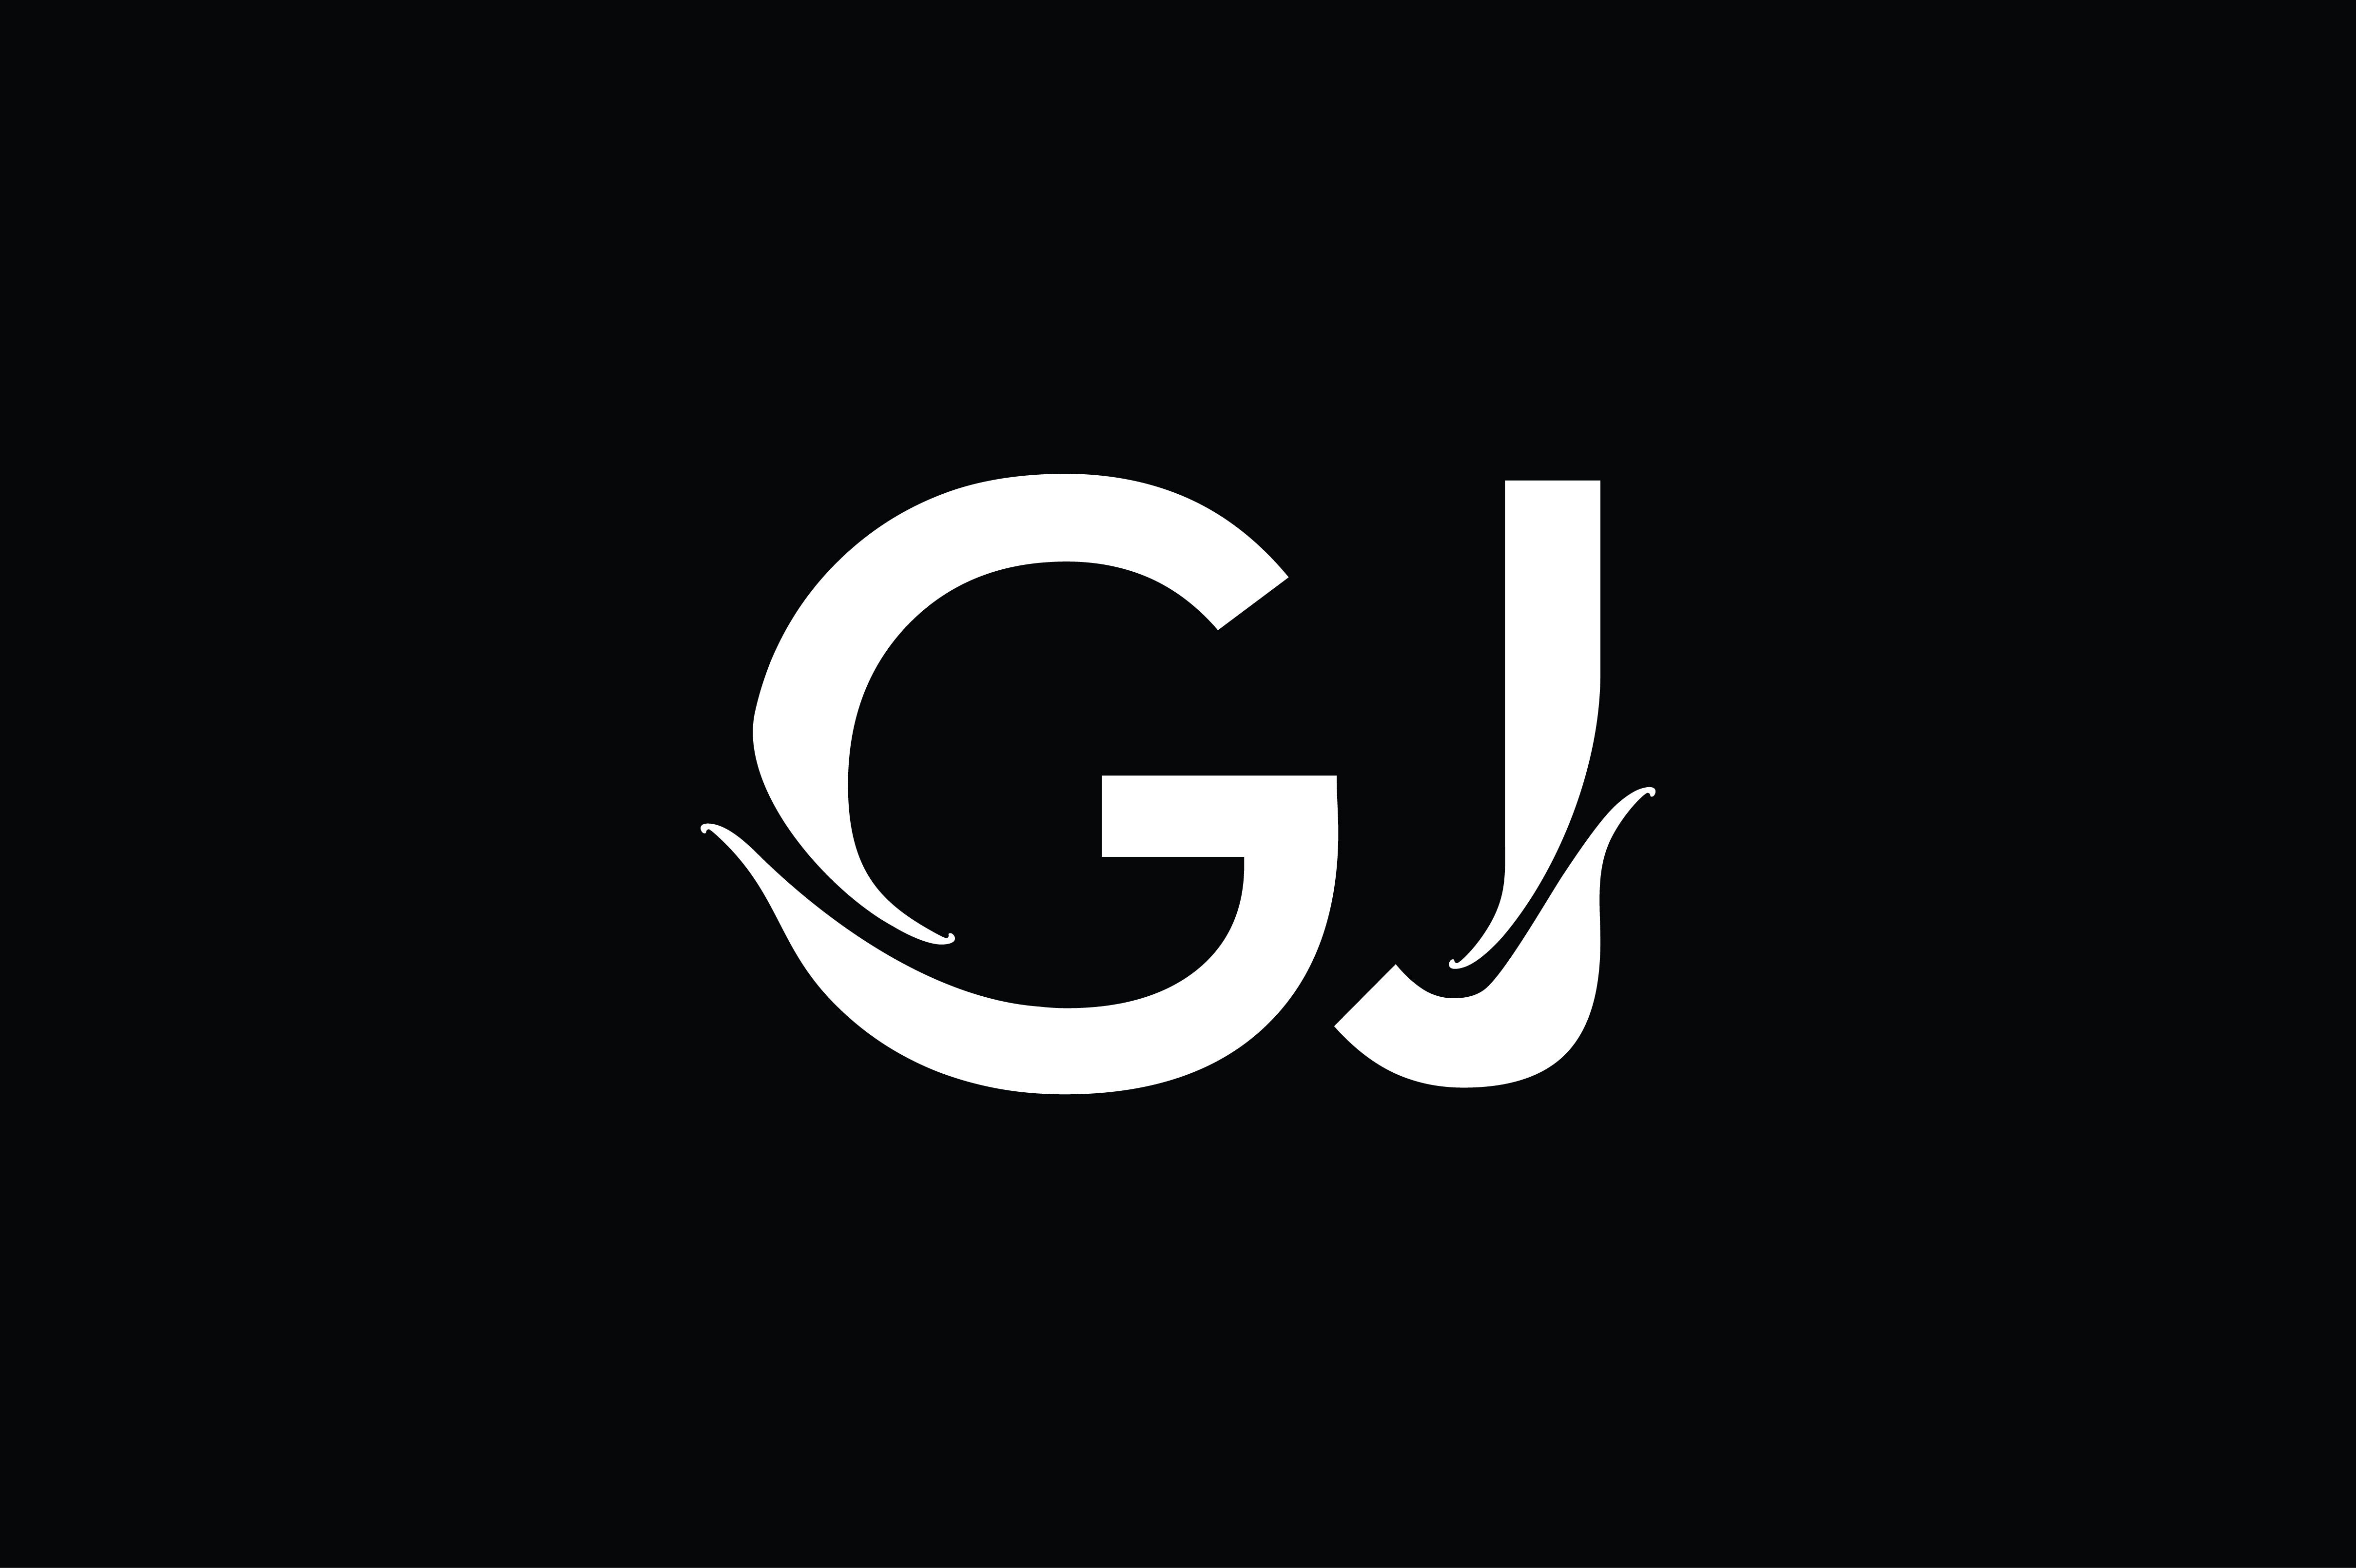 Gj Monogram Logo Design By Vectorseller Thehungryjpeg Com